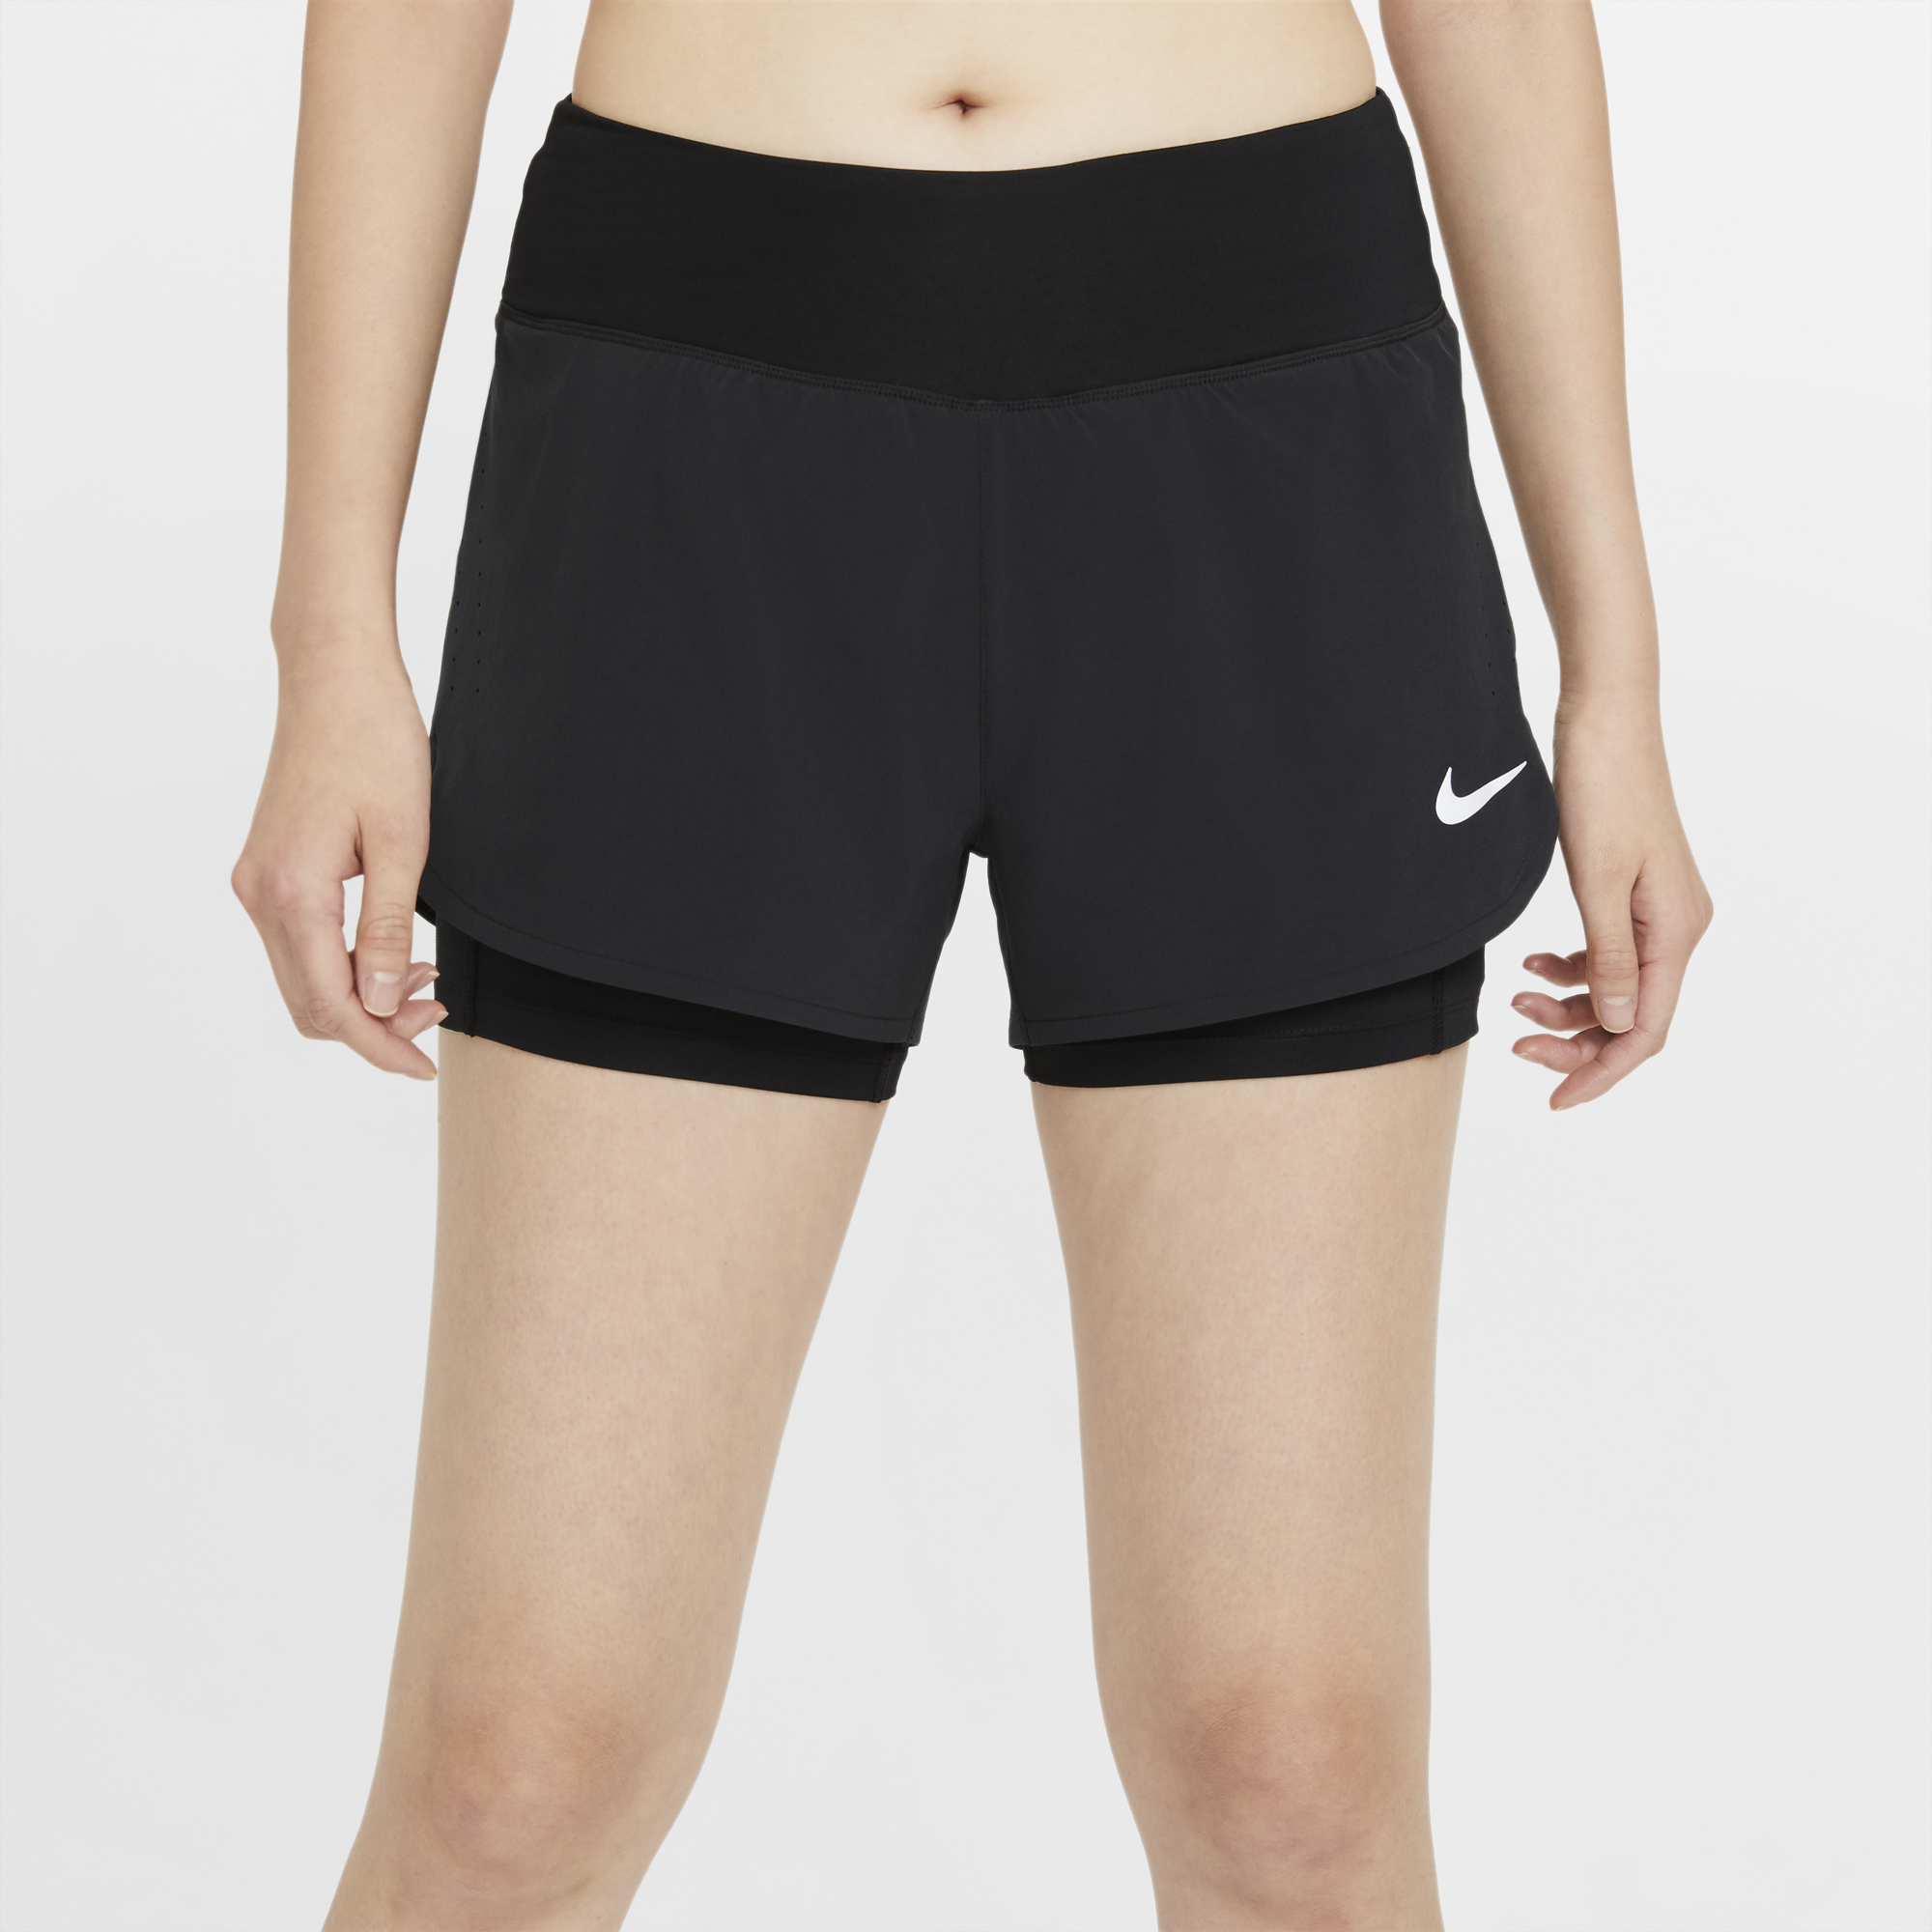 Risikabel kontanter bord Women's Nike Eclipse 2 in 1 Shorts